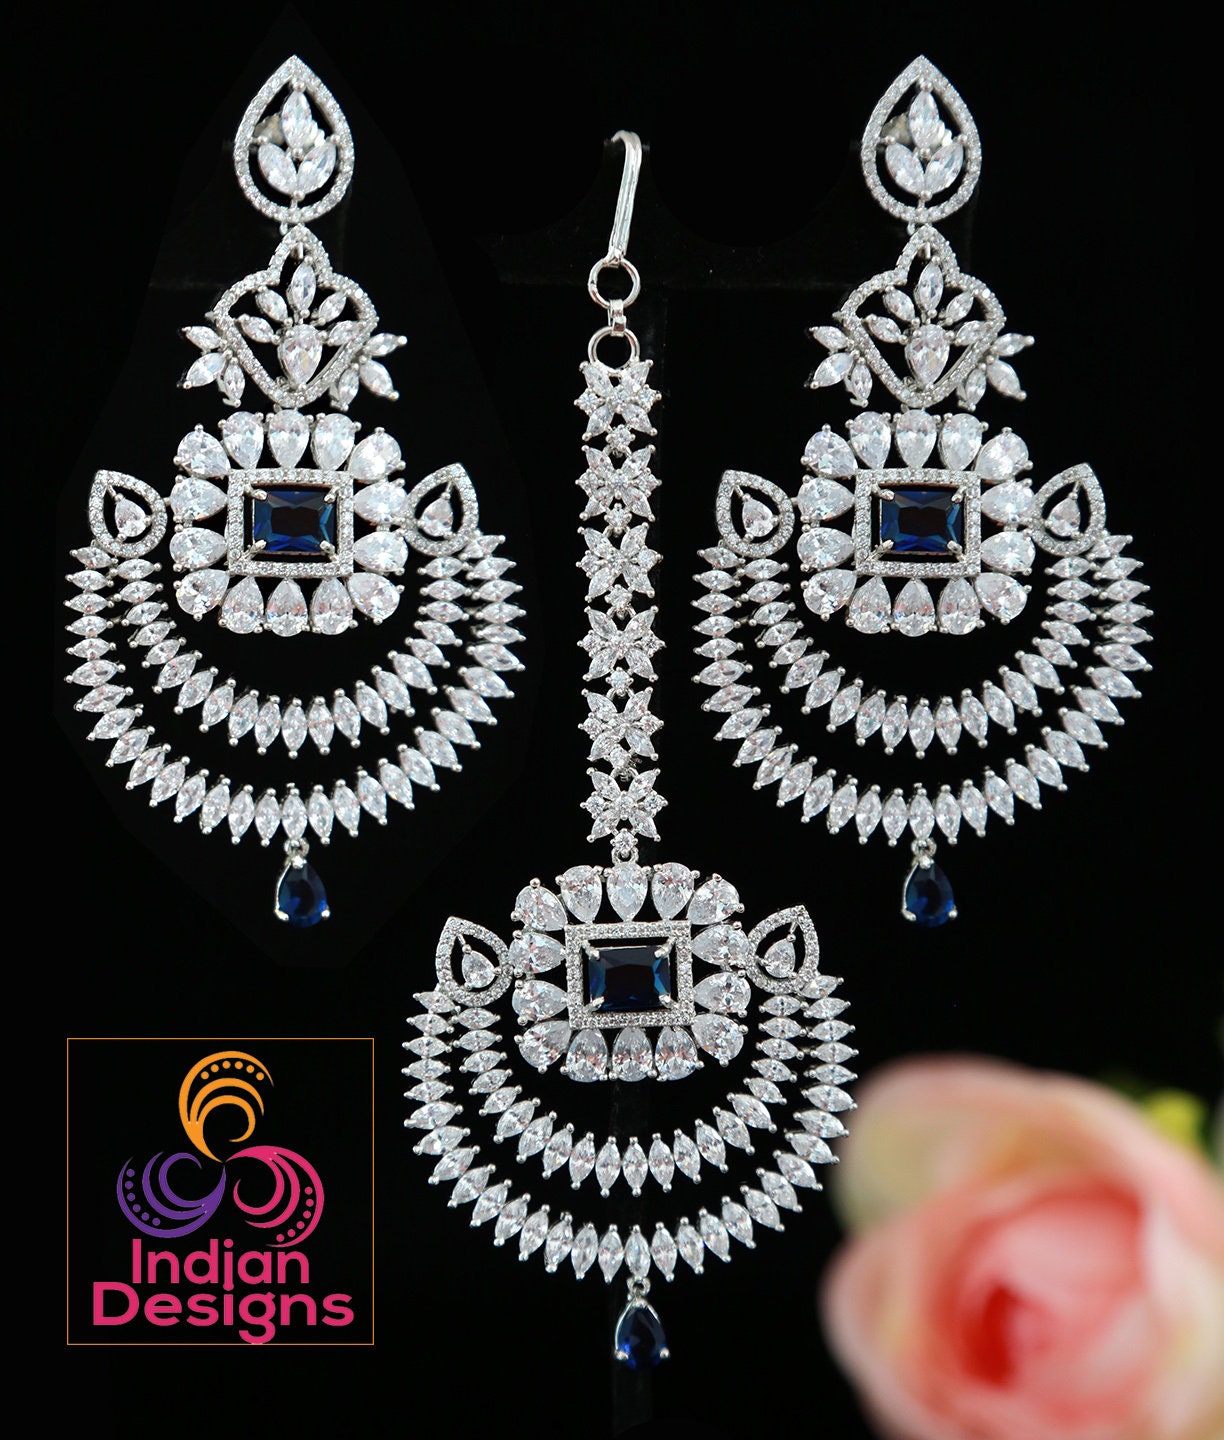 Chandbali crystal earrings tikka set Silver tone - Cz Color Stones | Punjabi earrings with maang tikka  wedding | Indian Designs collection